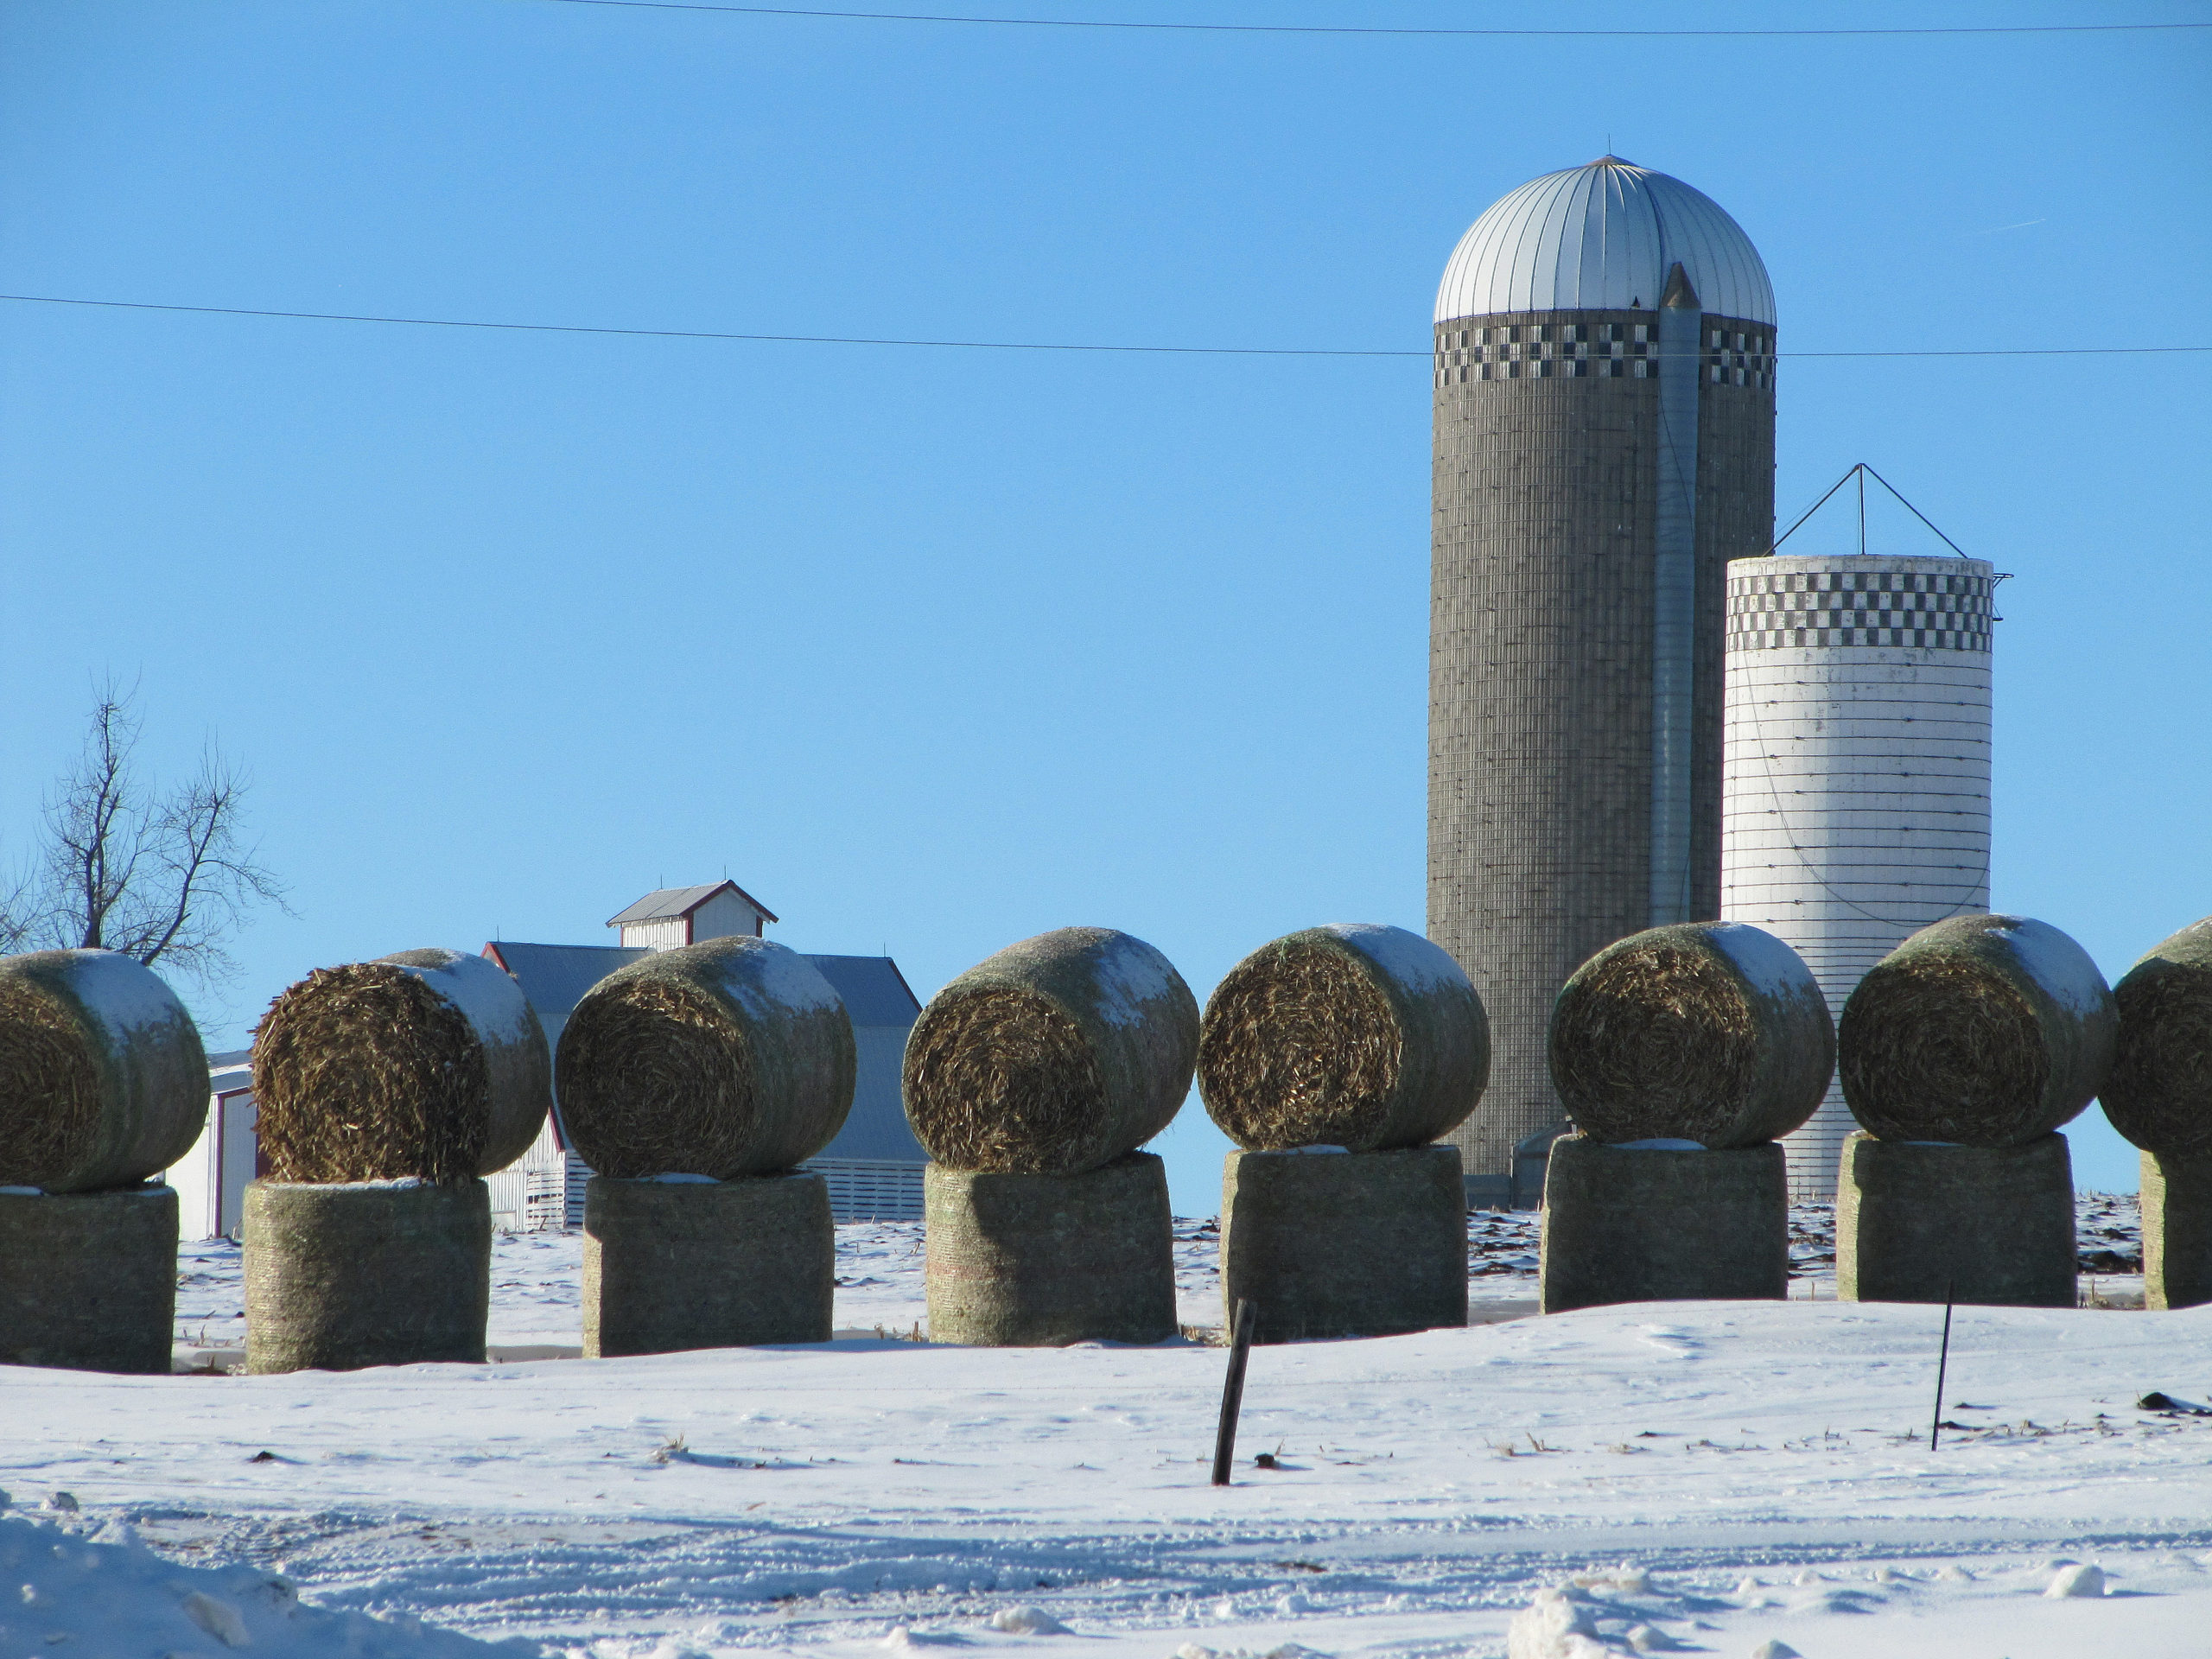 Lincoln Highway Farm Scene near Carroll Iowa